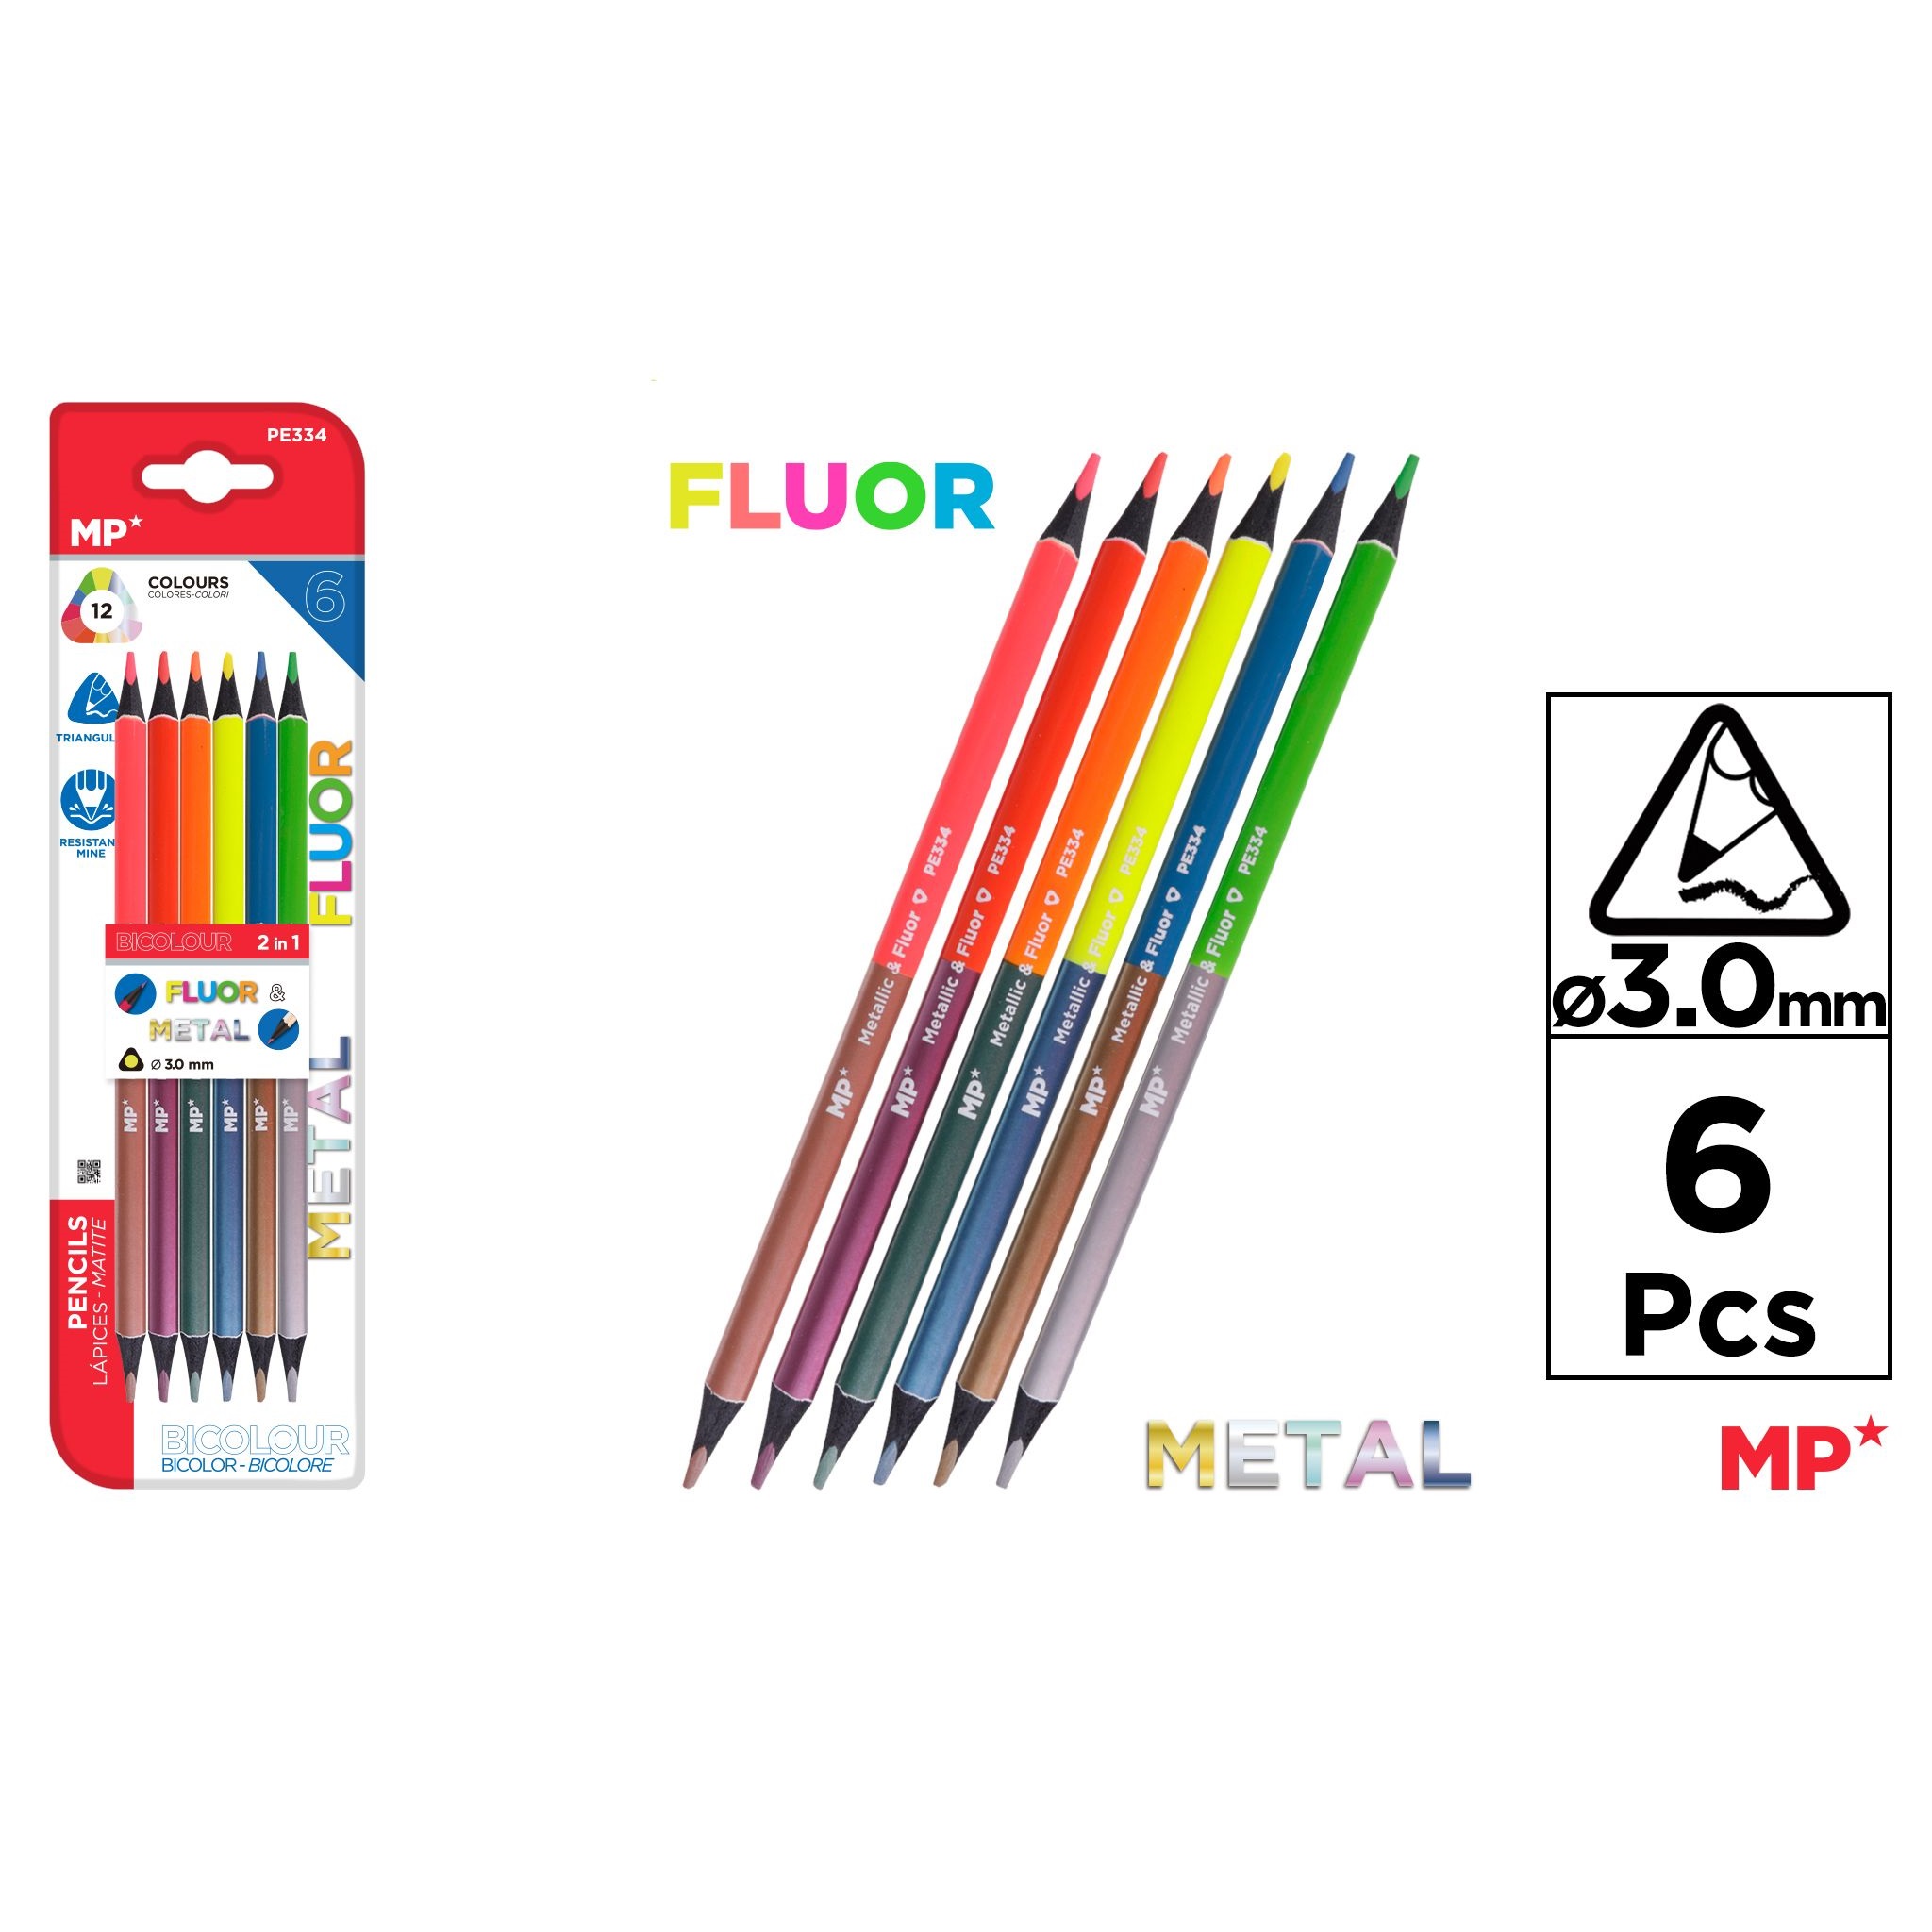 PE334/340 Dual Tip Dual Color Pencils Metallic Pencils Fluorescent Pencils Production and Supply